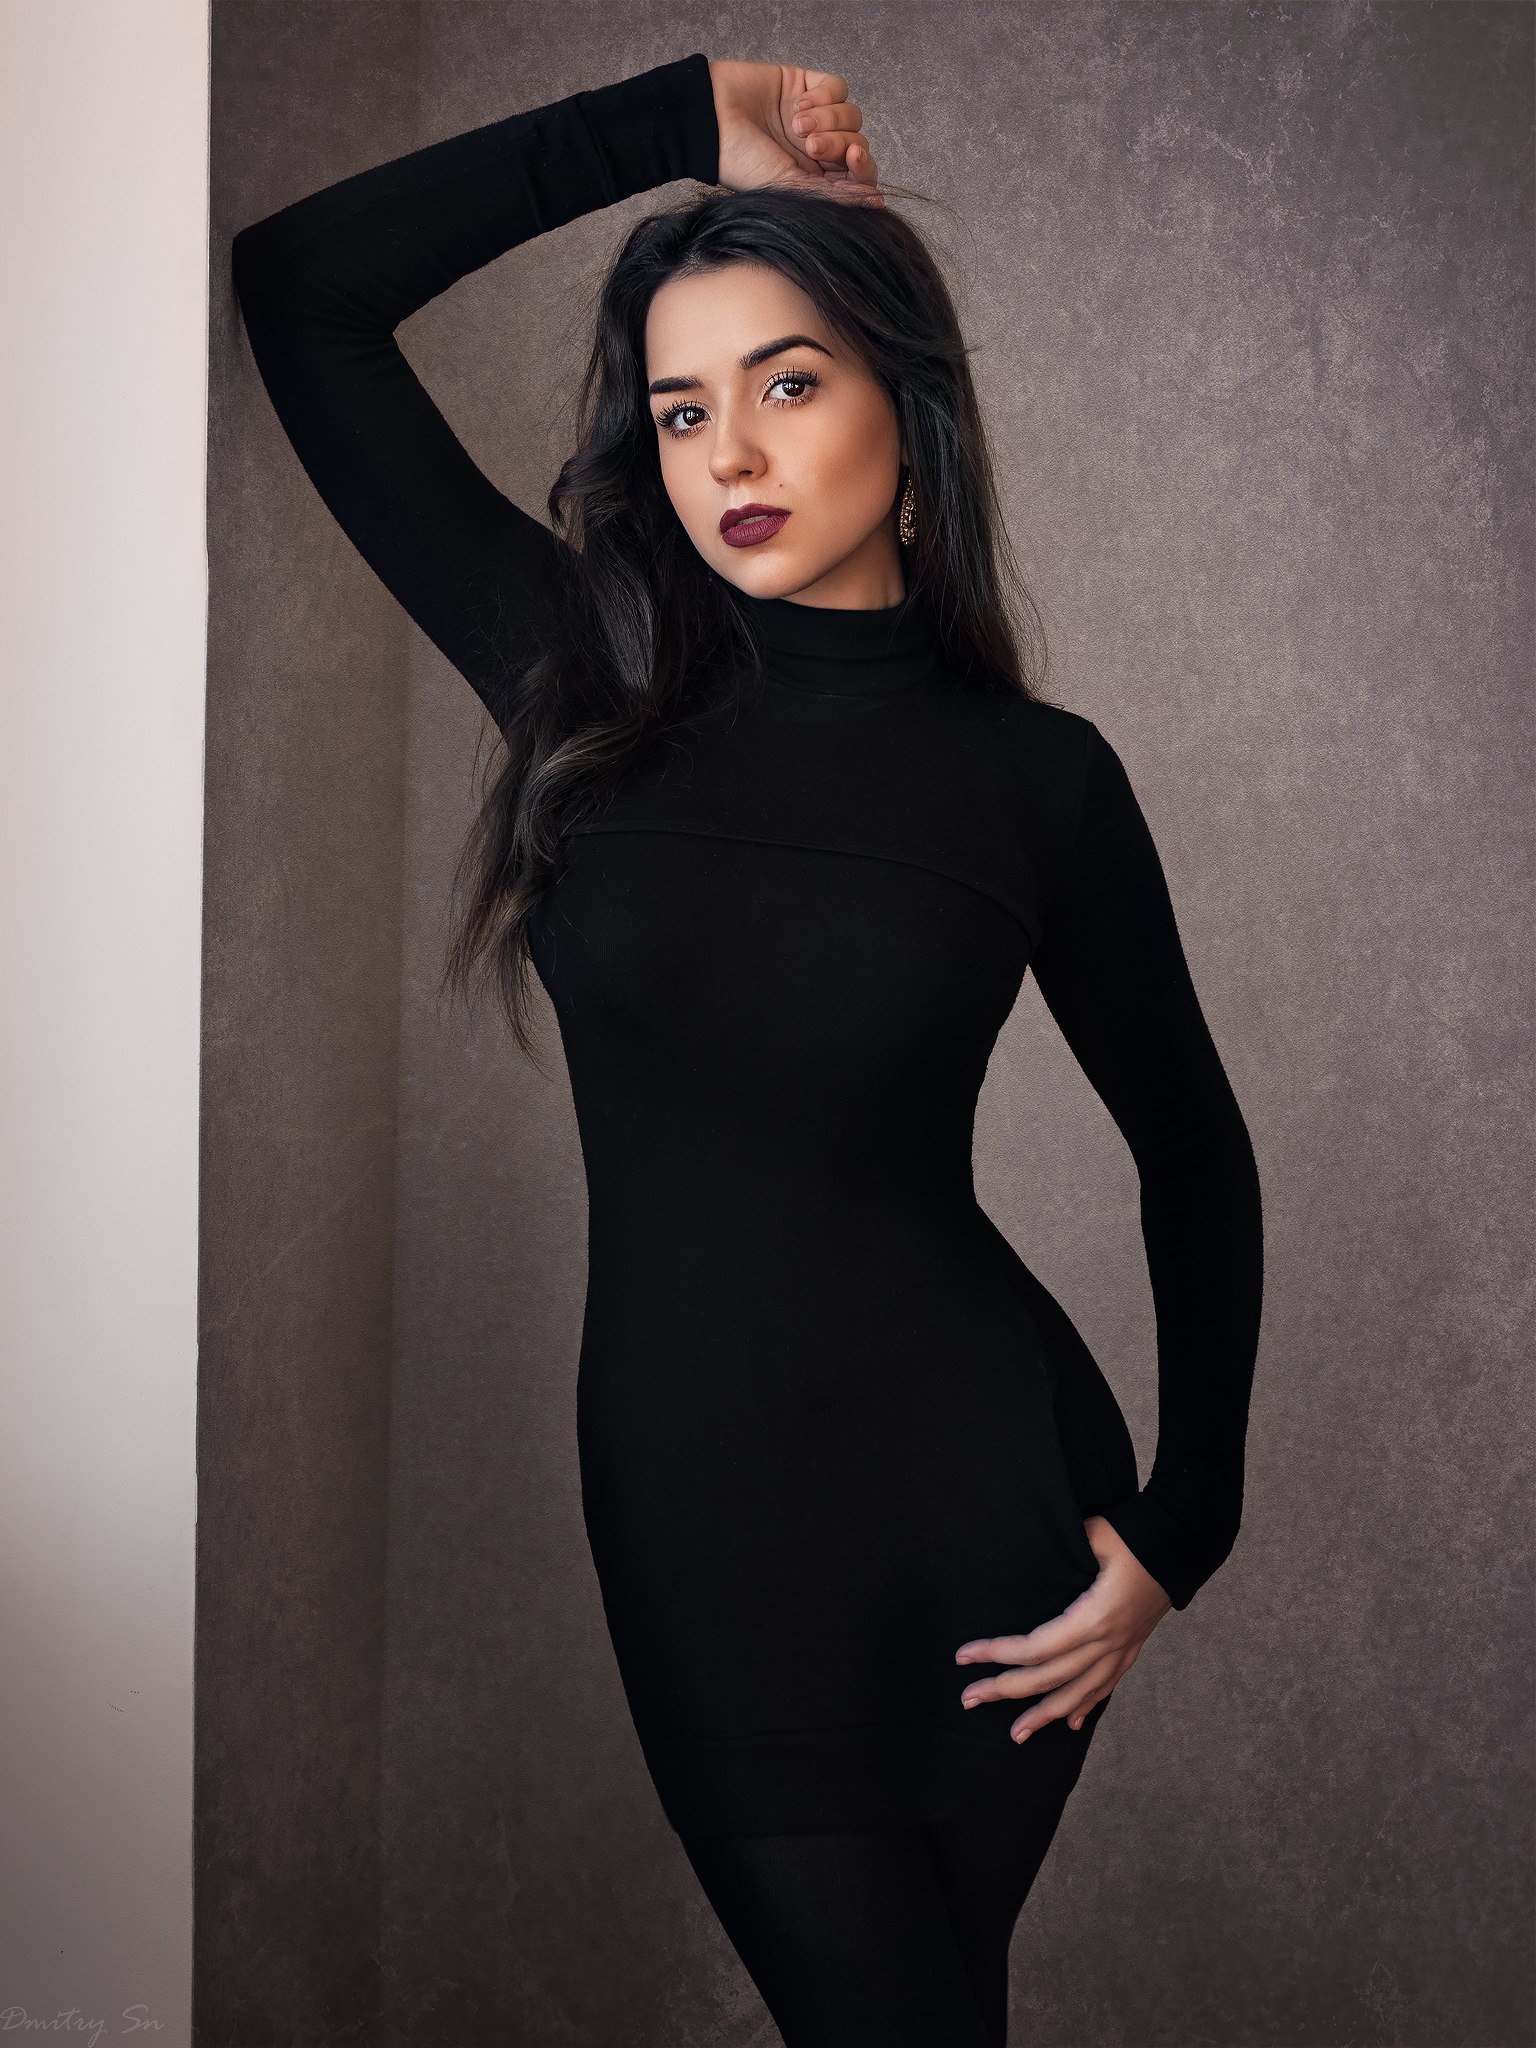 Ura Pechen Women Model Arms Up Black Black Clothing Black Hair Black Dress Looking At Viewer Wavy Ha 1536x2048